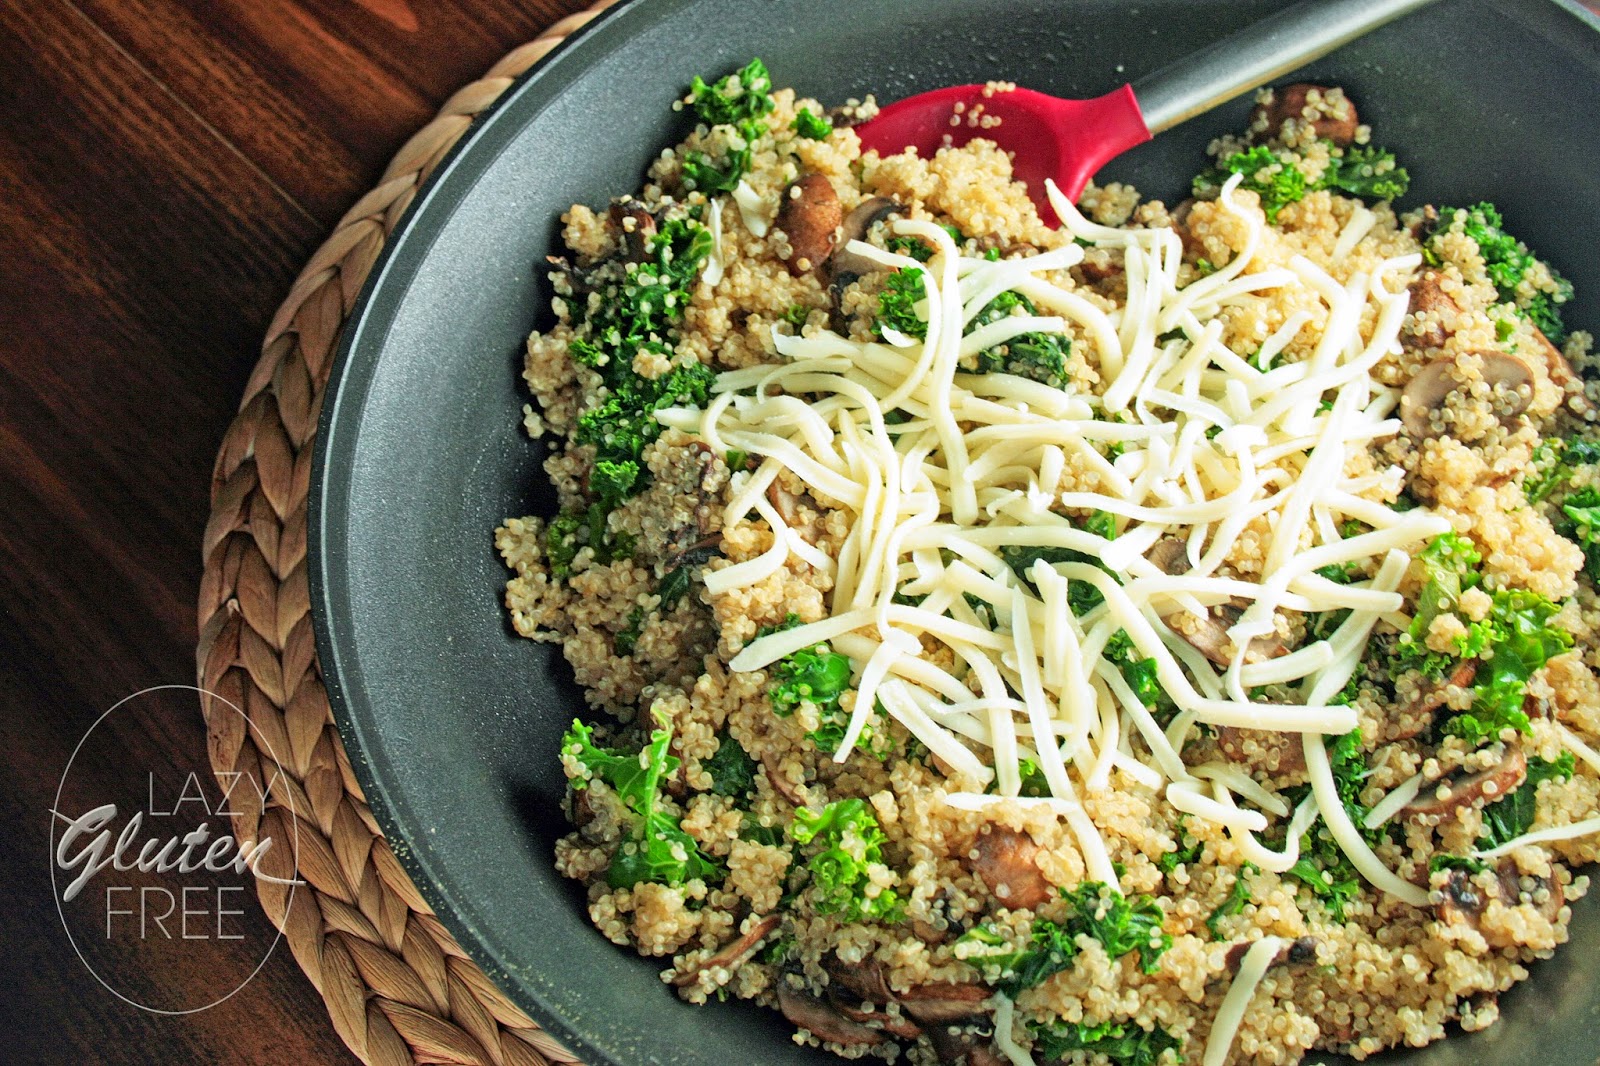 Lazy Gluten Free: Kale Mushroom Quinoa